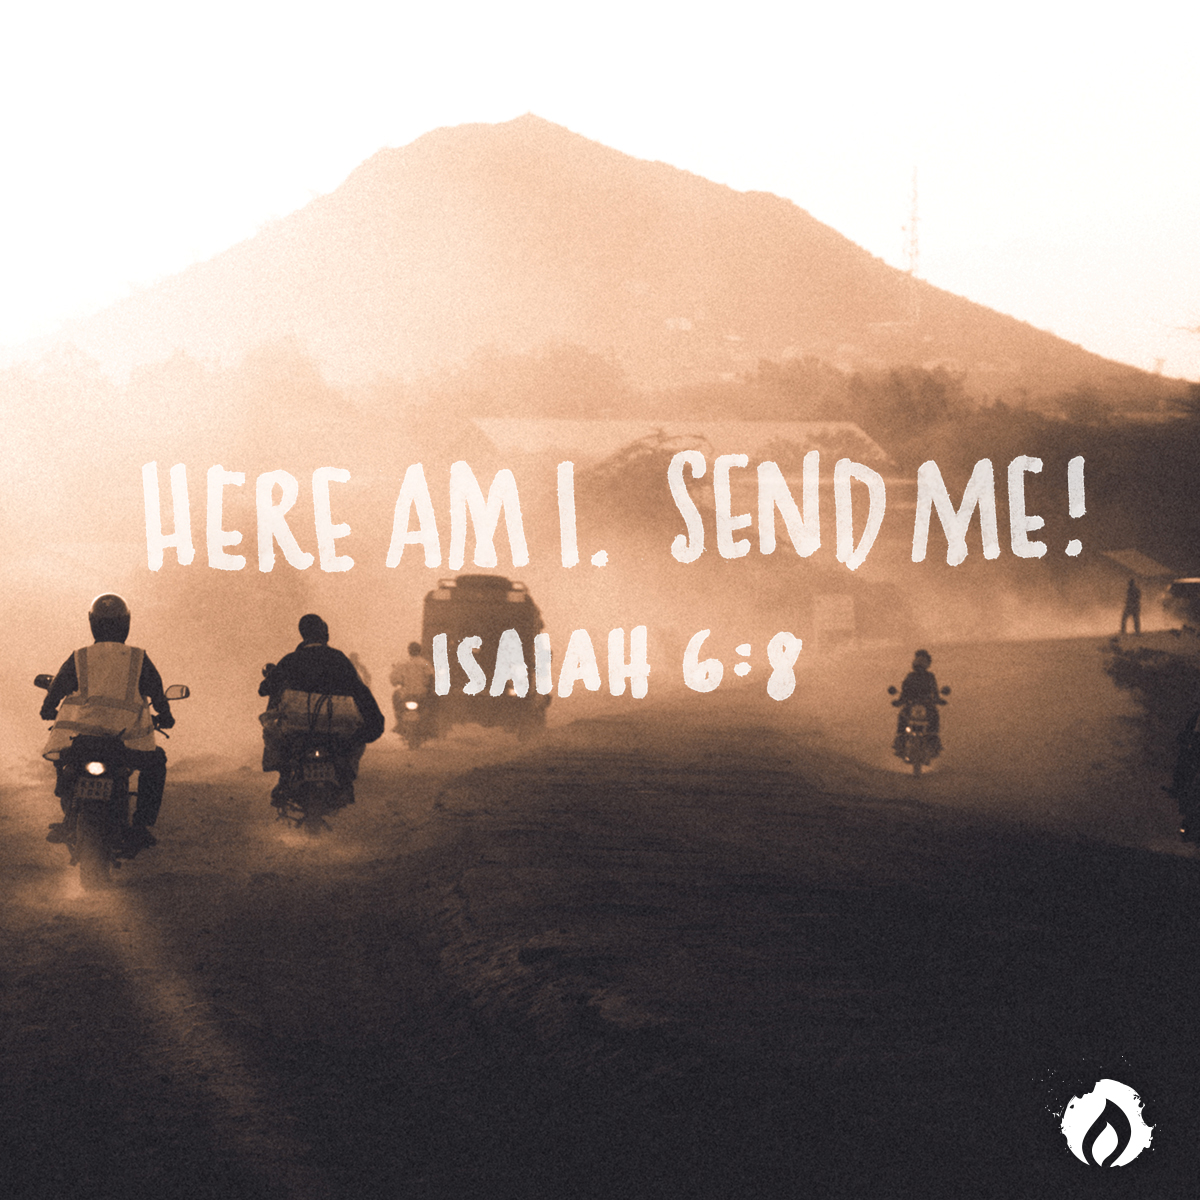 Isaiah 6:8